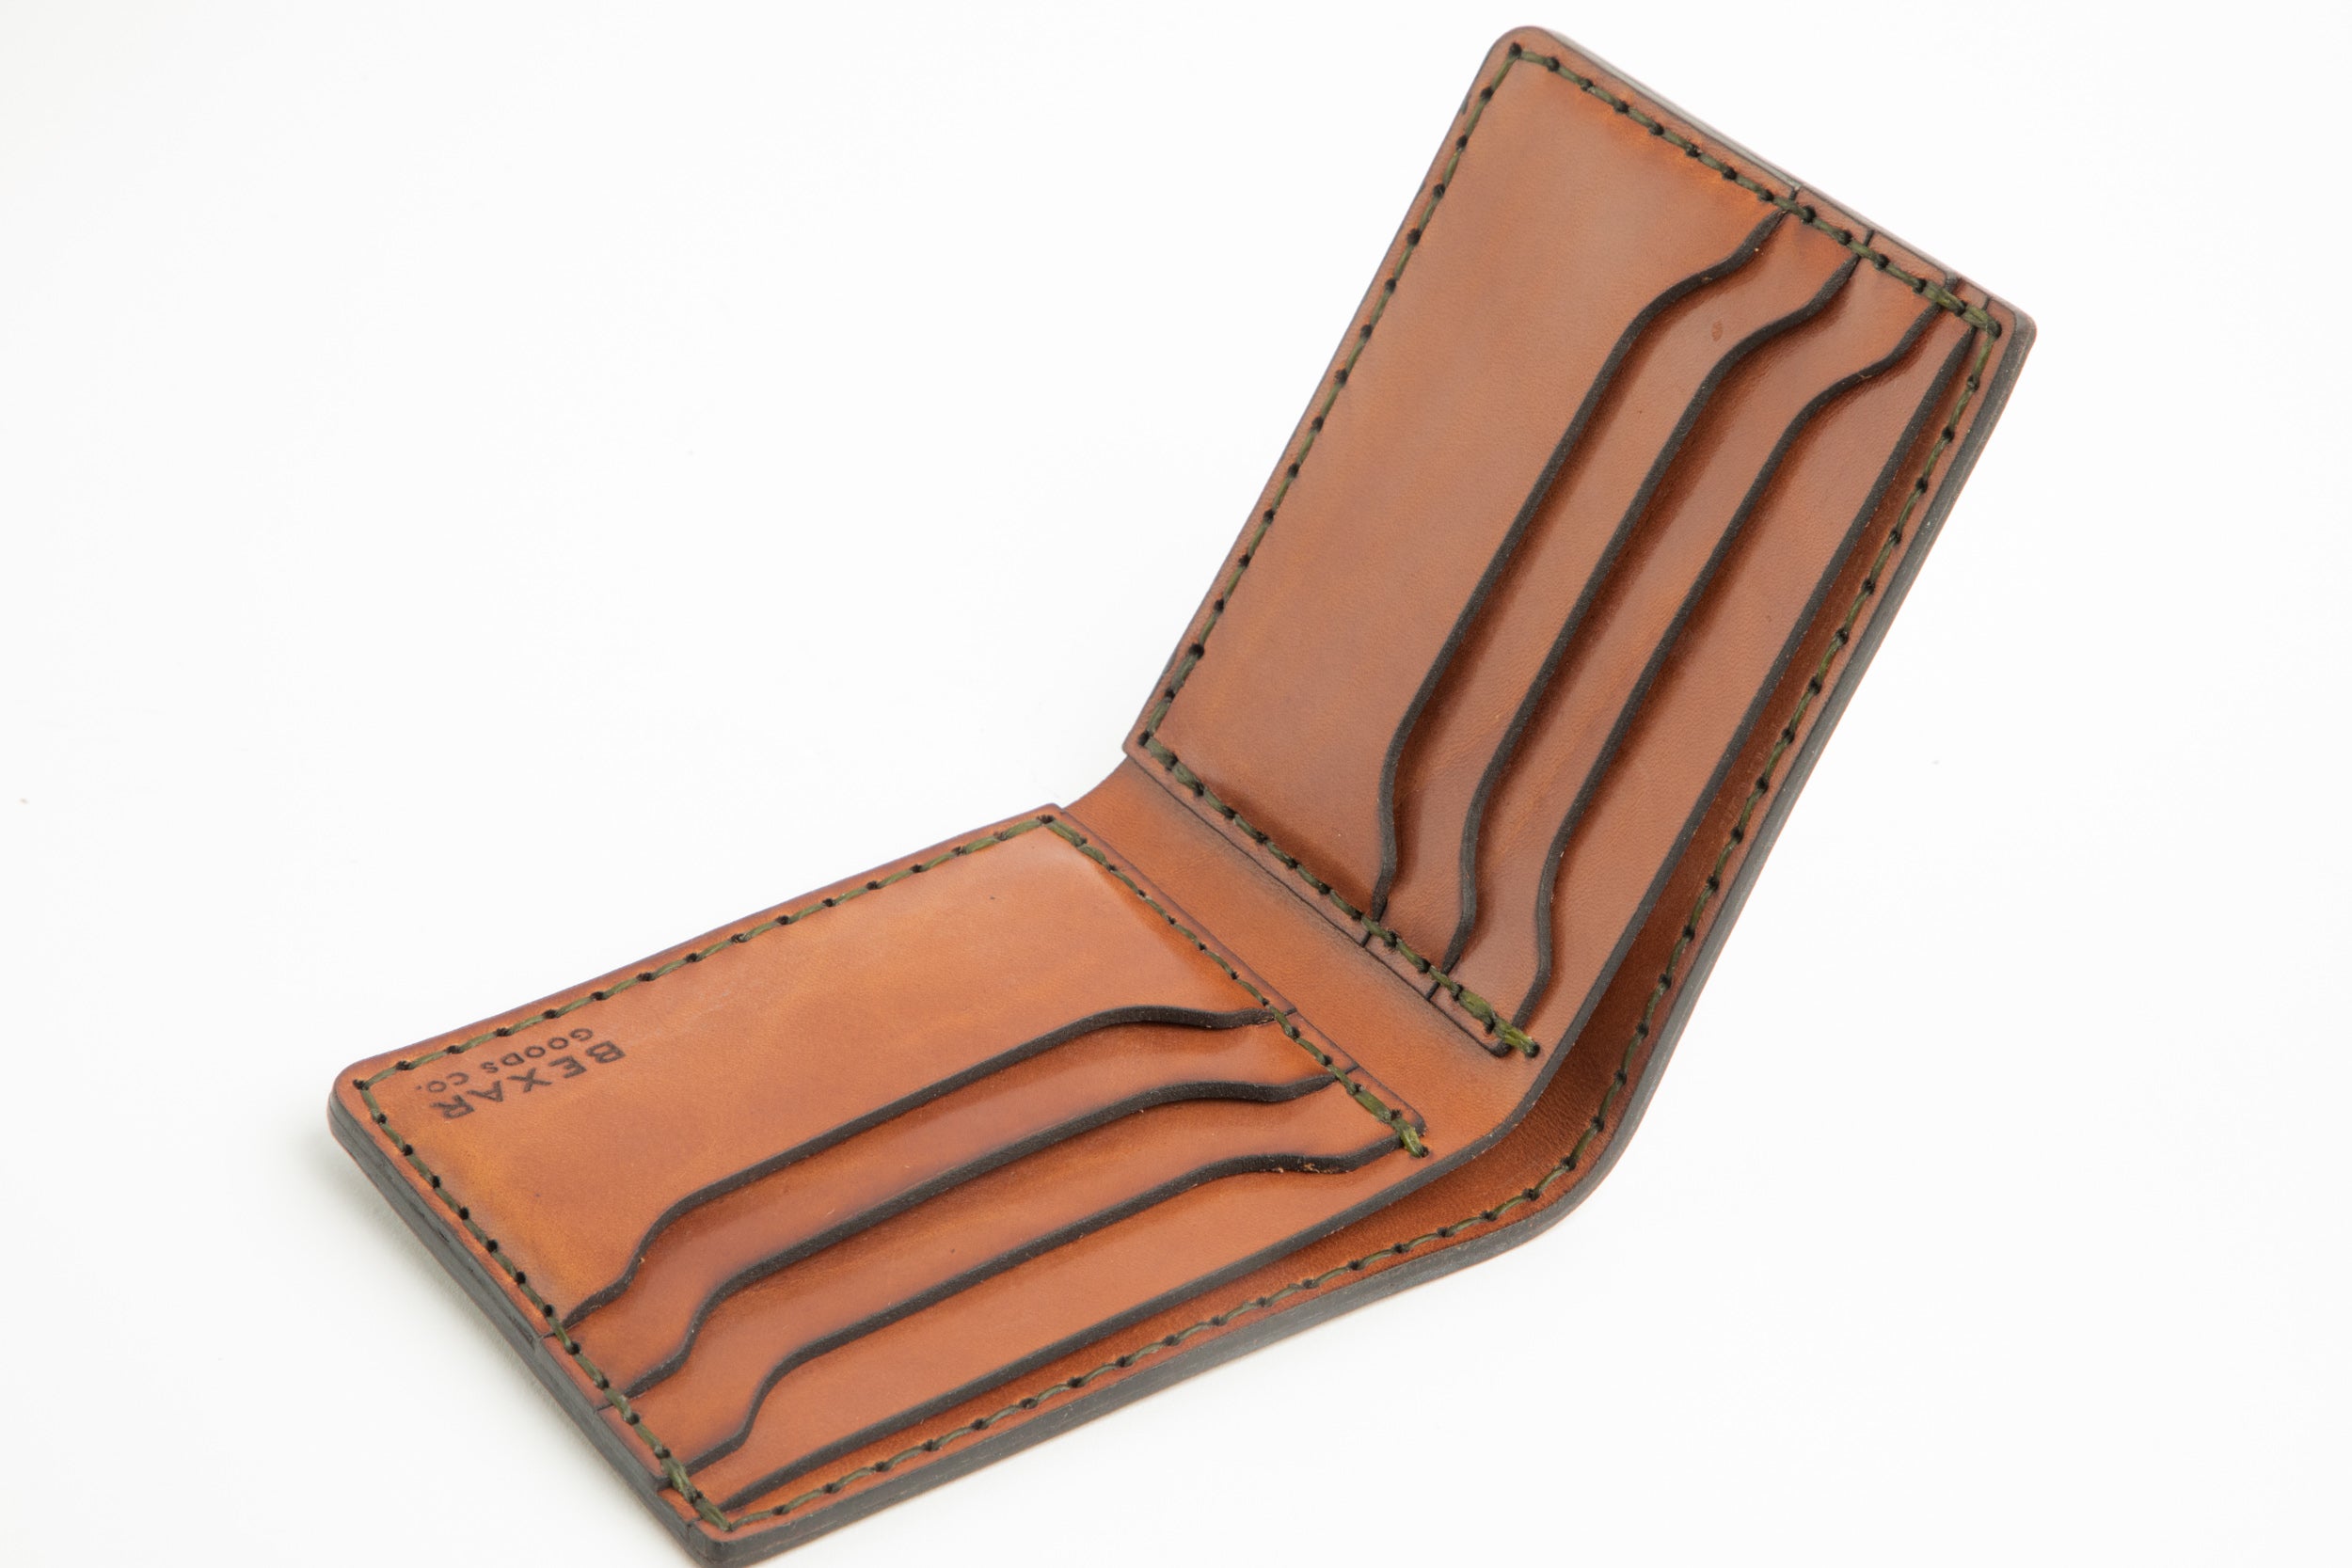 Bexar Goods Co Vertical Card Wallet